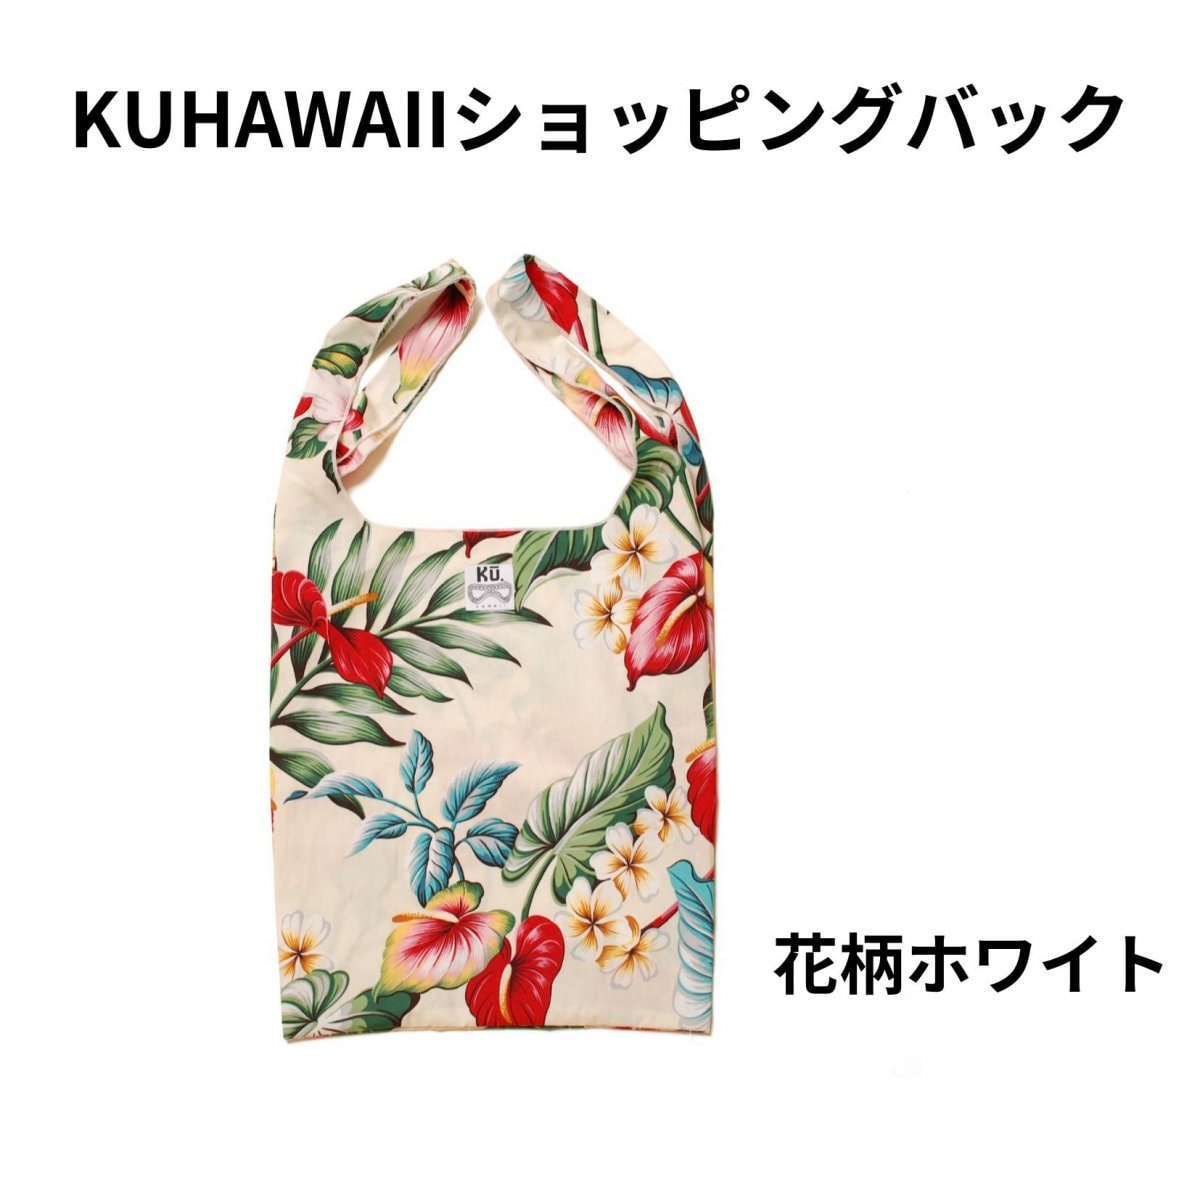 Ku.HAWAII オリジナルショッピングバッグ